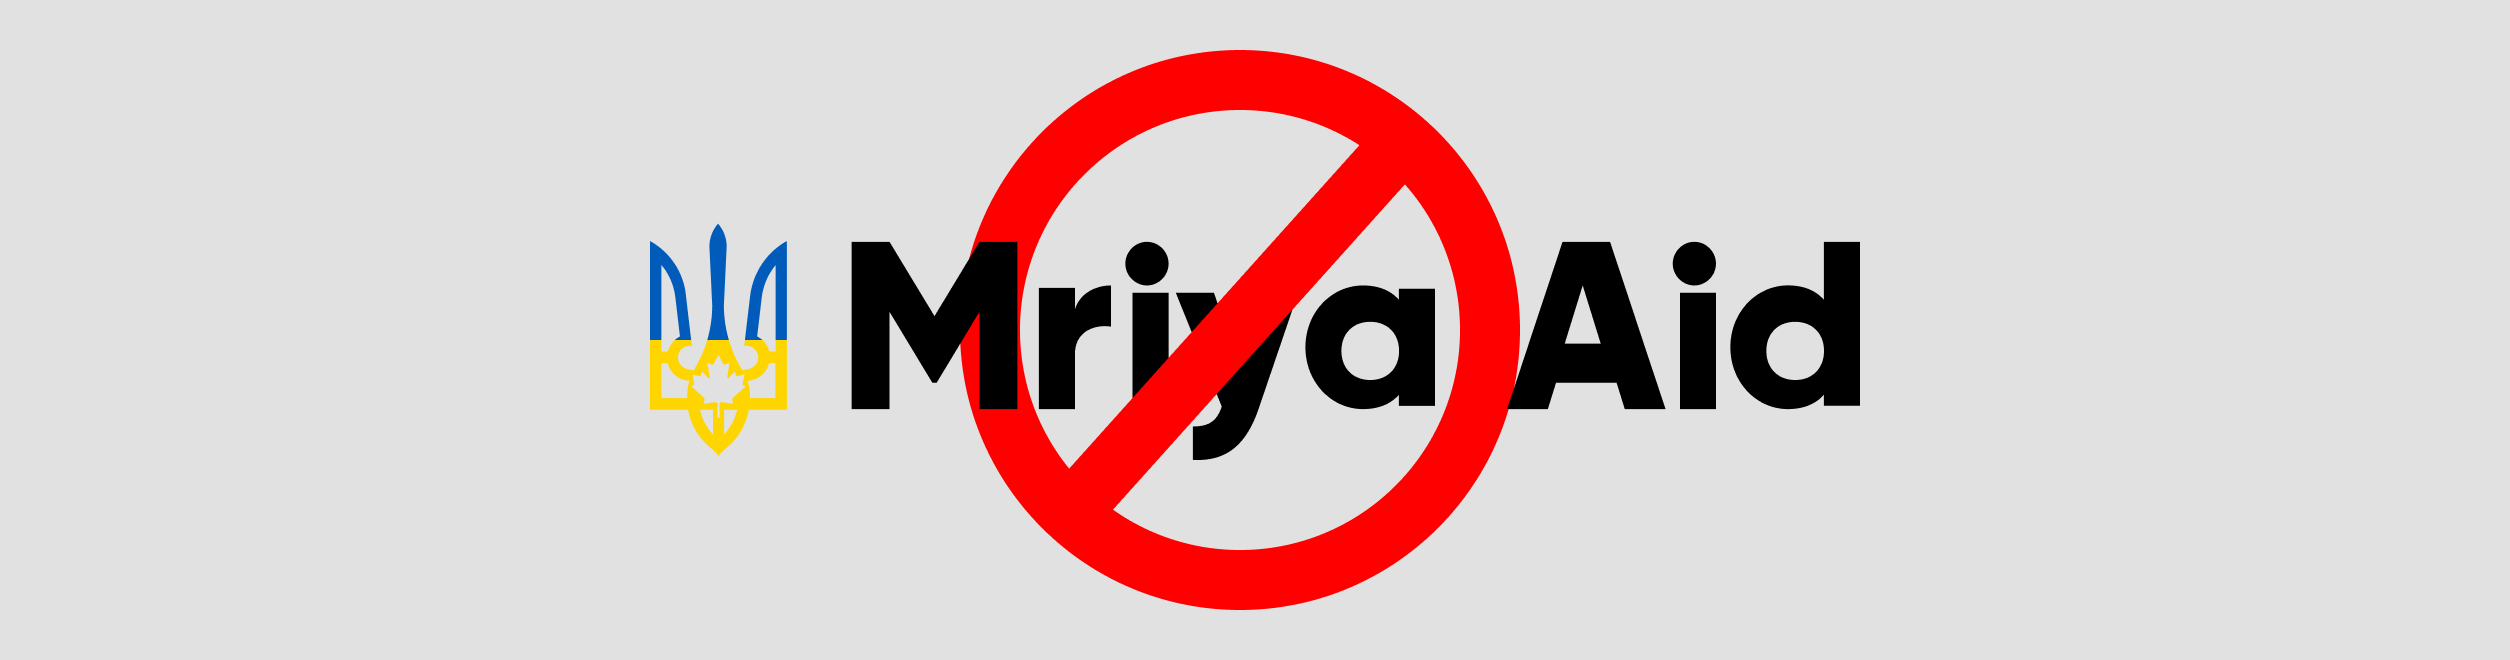 Mriya Aid Logo Warning